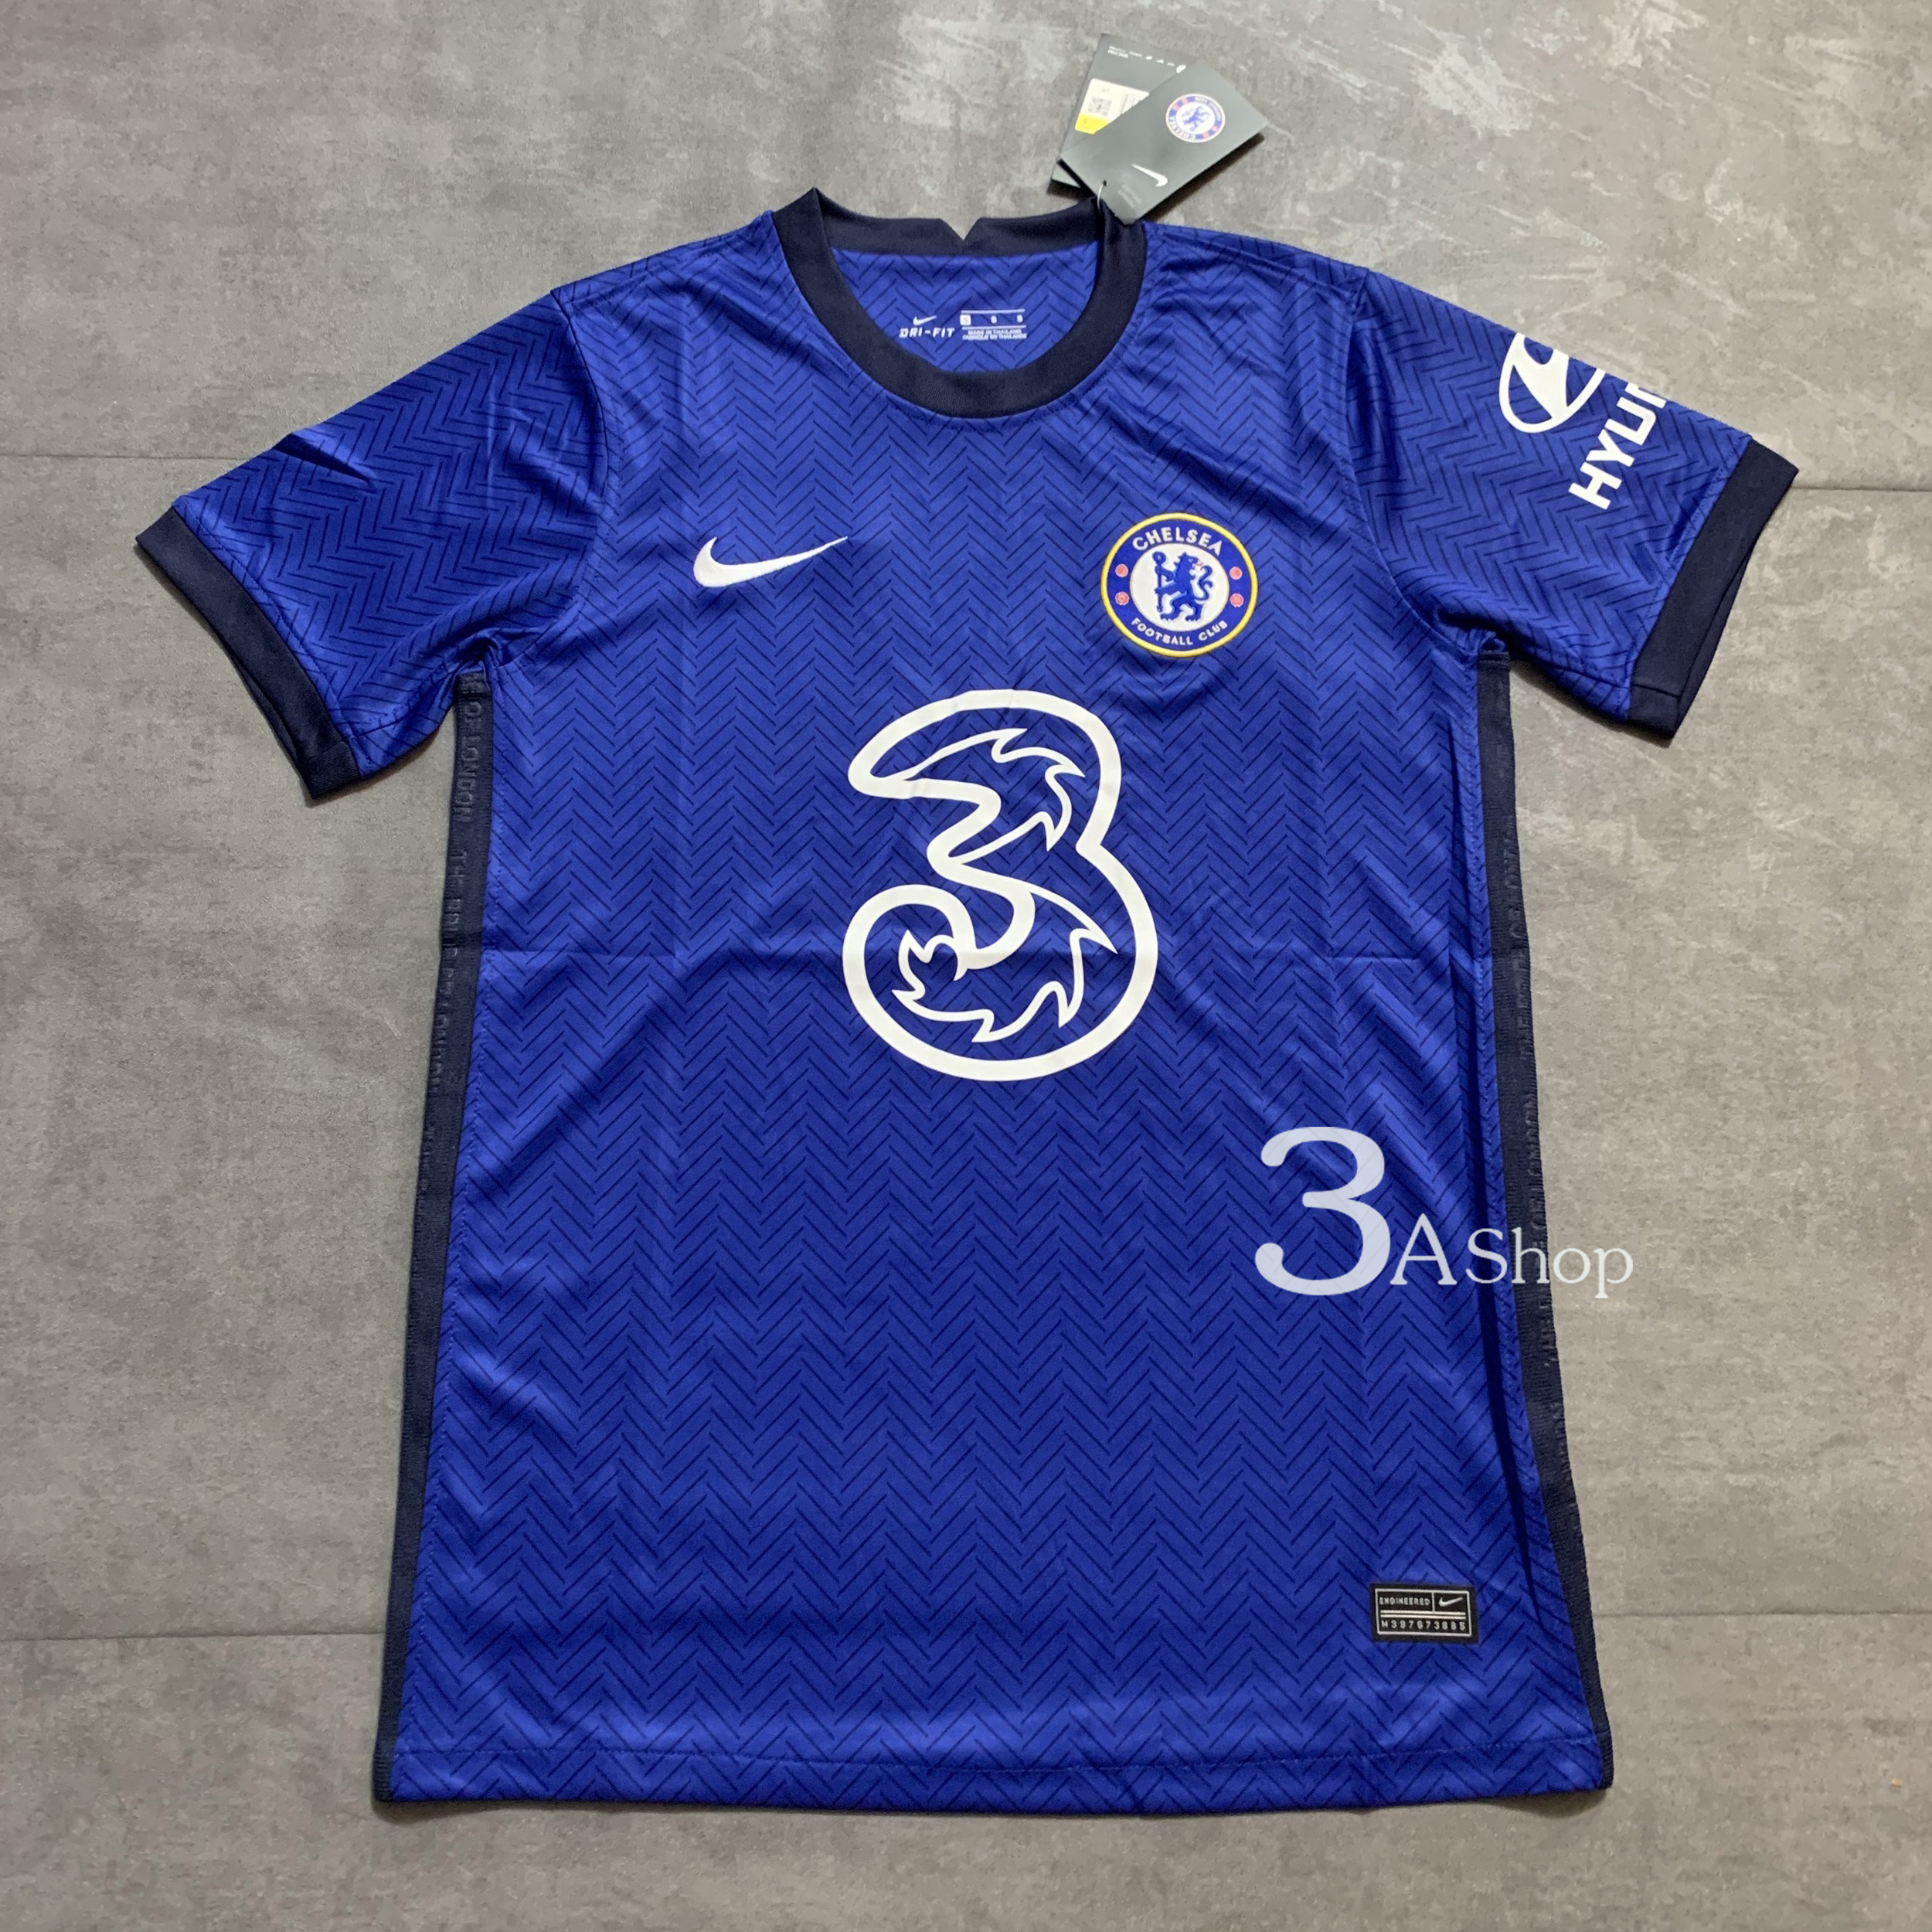 Chelsea 20/21 HOME FOOTBALL SHIRT SOCCER JERSEY เสื้อบอล เสื้อฟุตบอลชาย เสื้อบอลชาย เสื้อฟุตบอล เสื้อกีฬาชาย2021 เสื้อทีมเชลซี ปี21 เกรด AAA